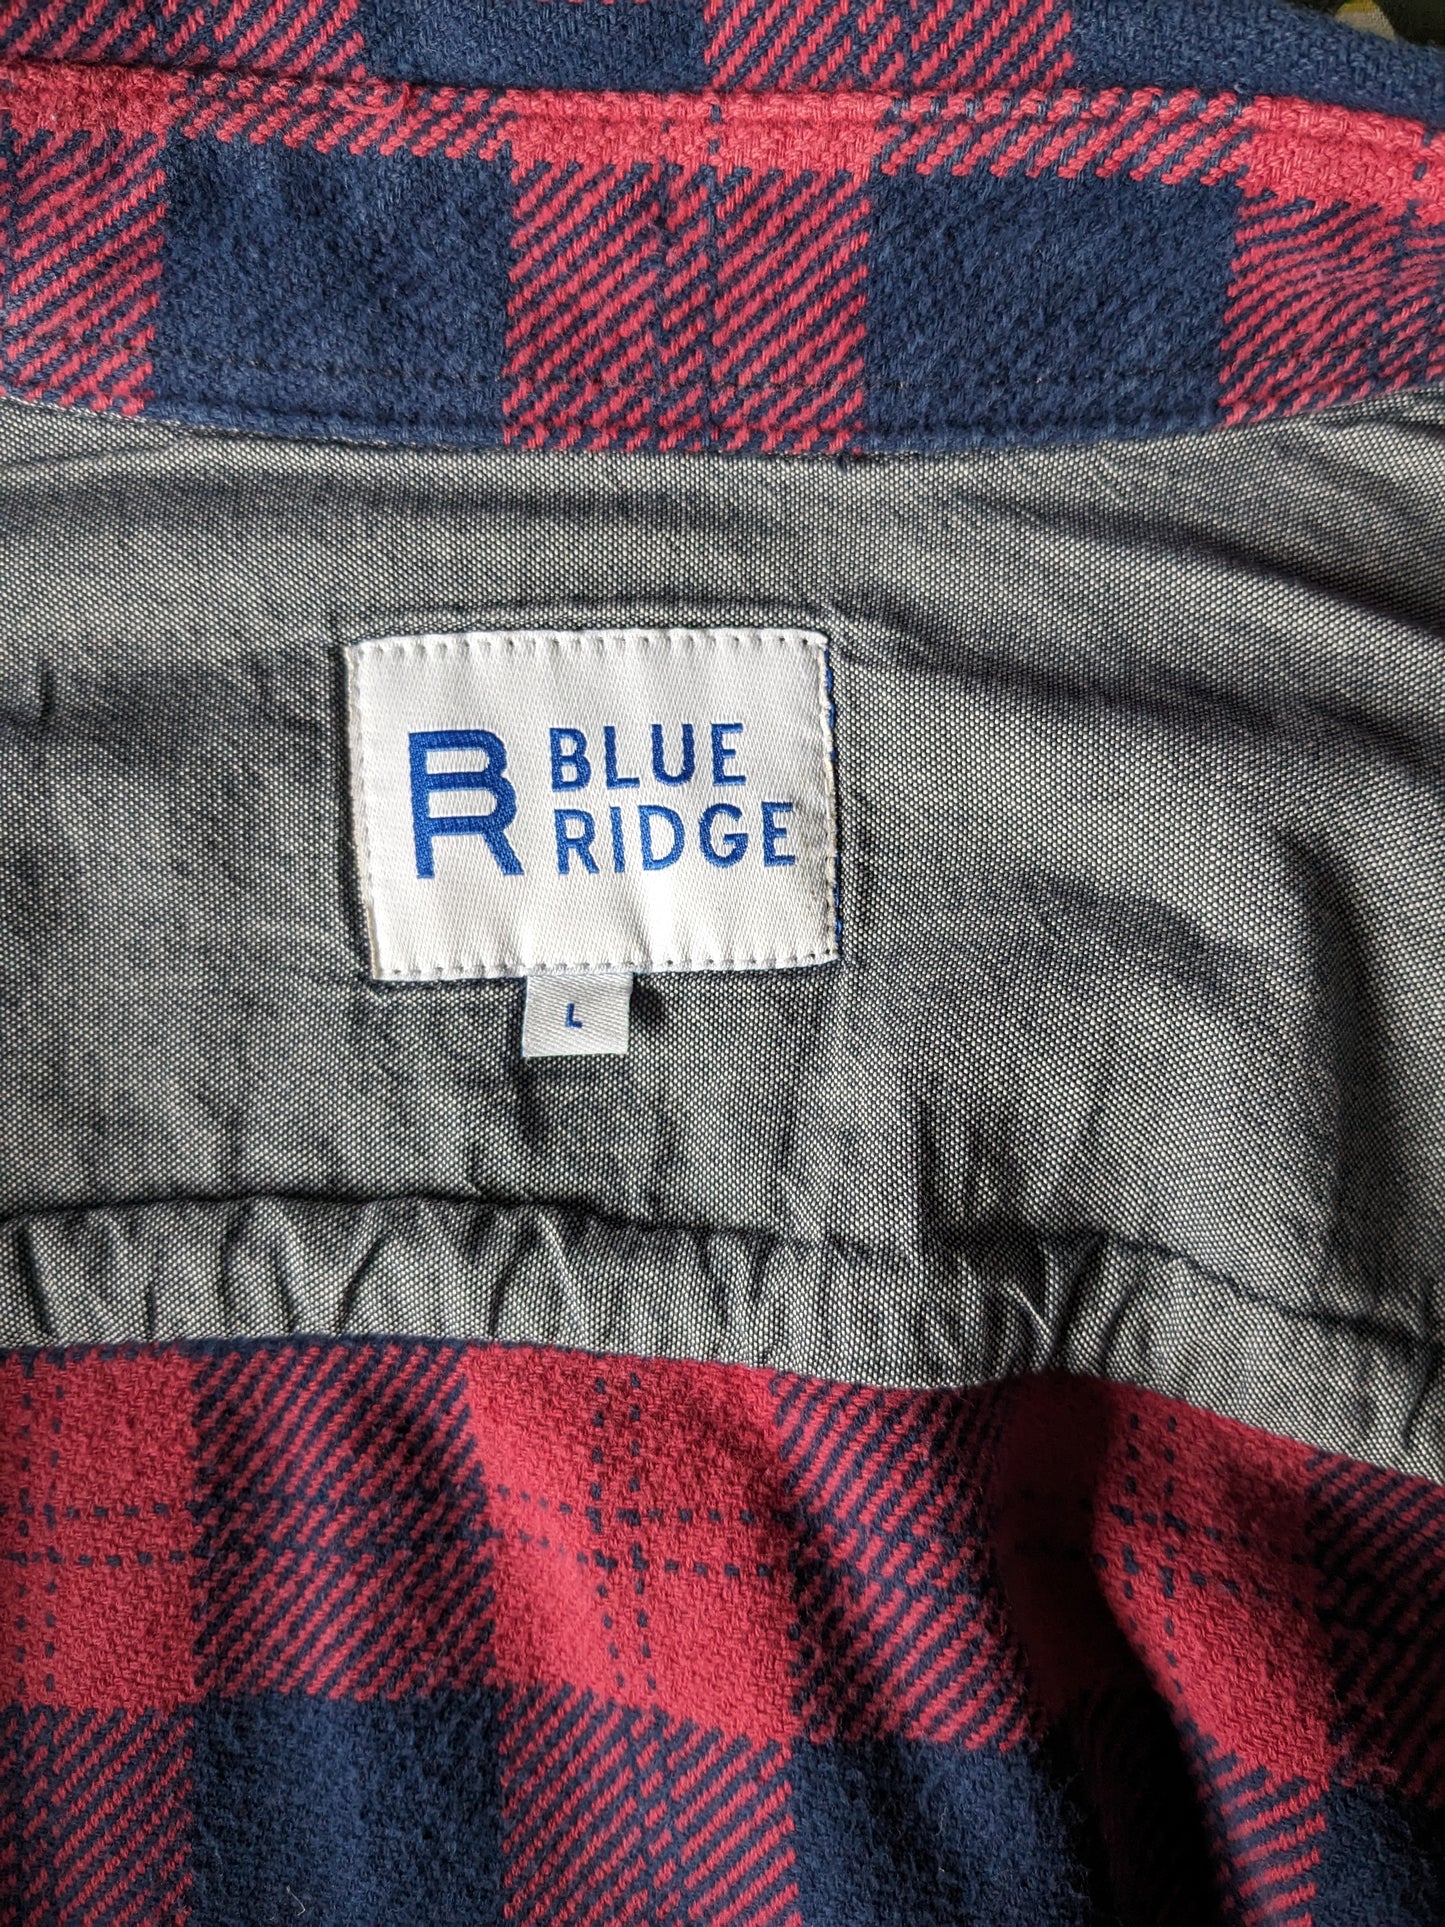 Blue Ridge Flanellen overhemd. Dikkere stof. Blauw Roze geruit. Maat L.